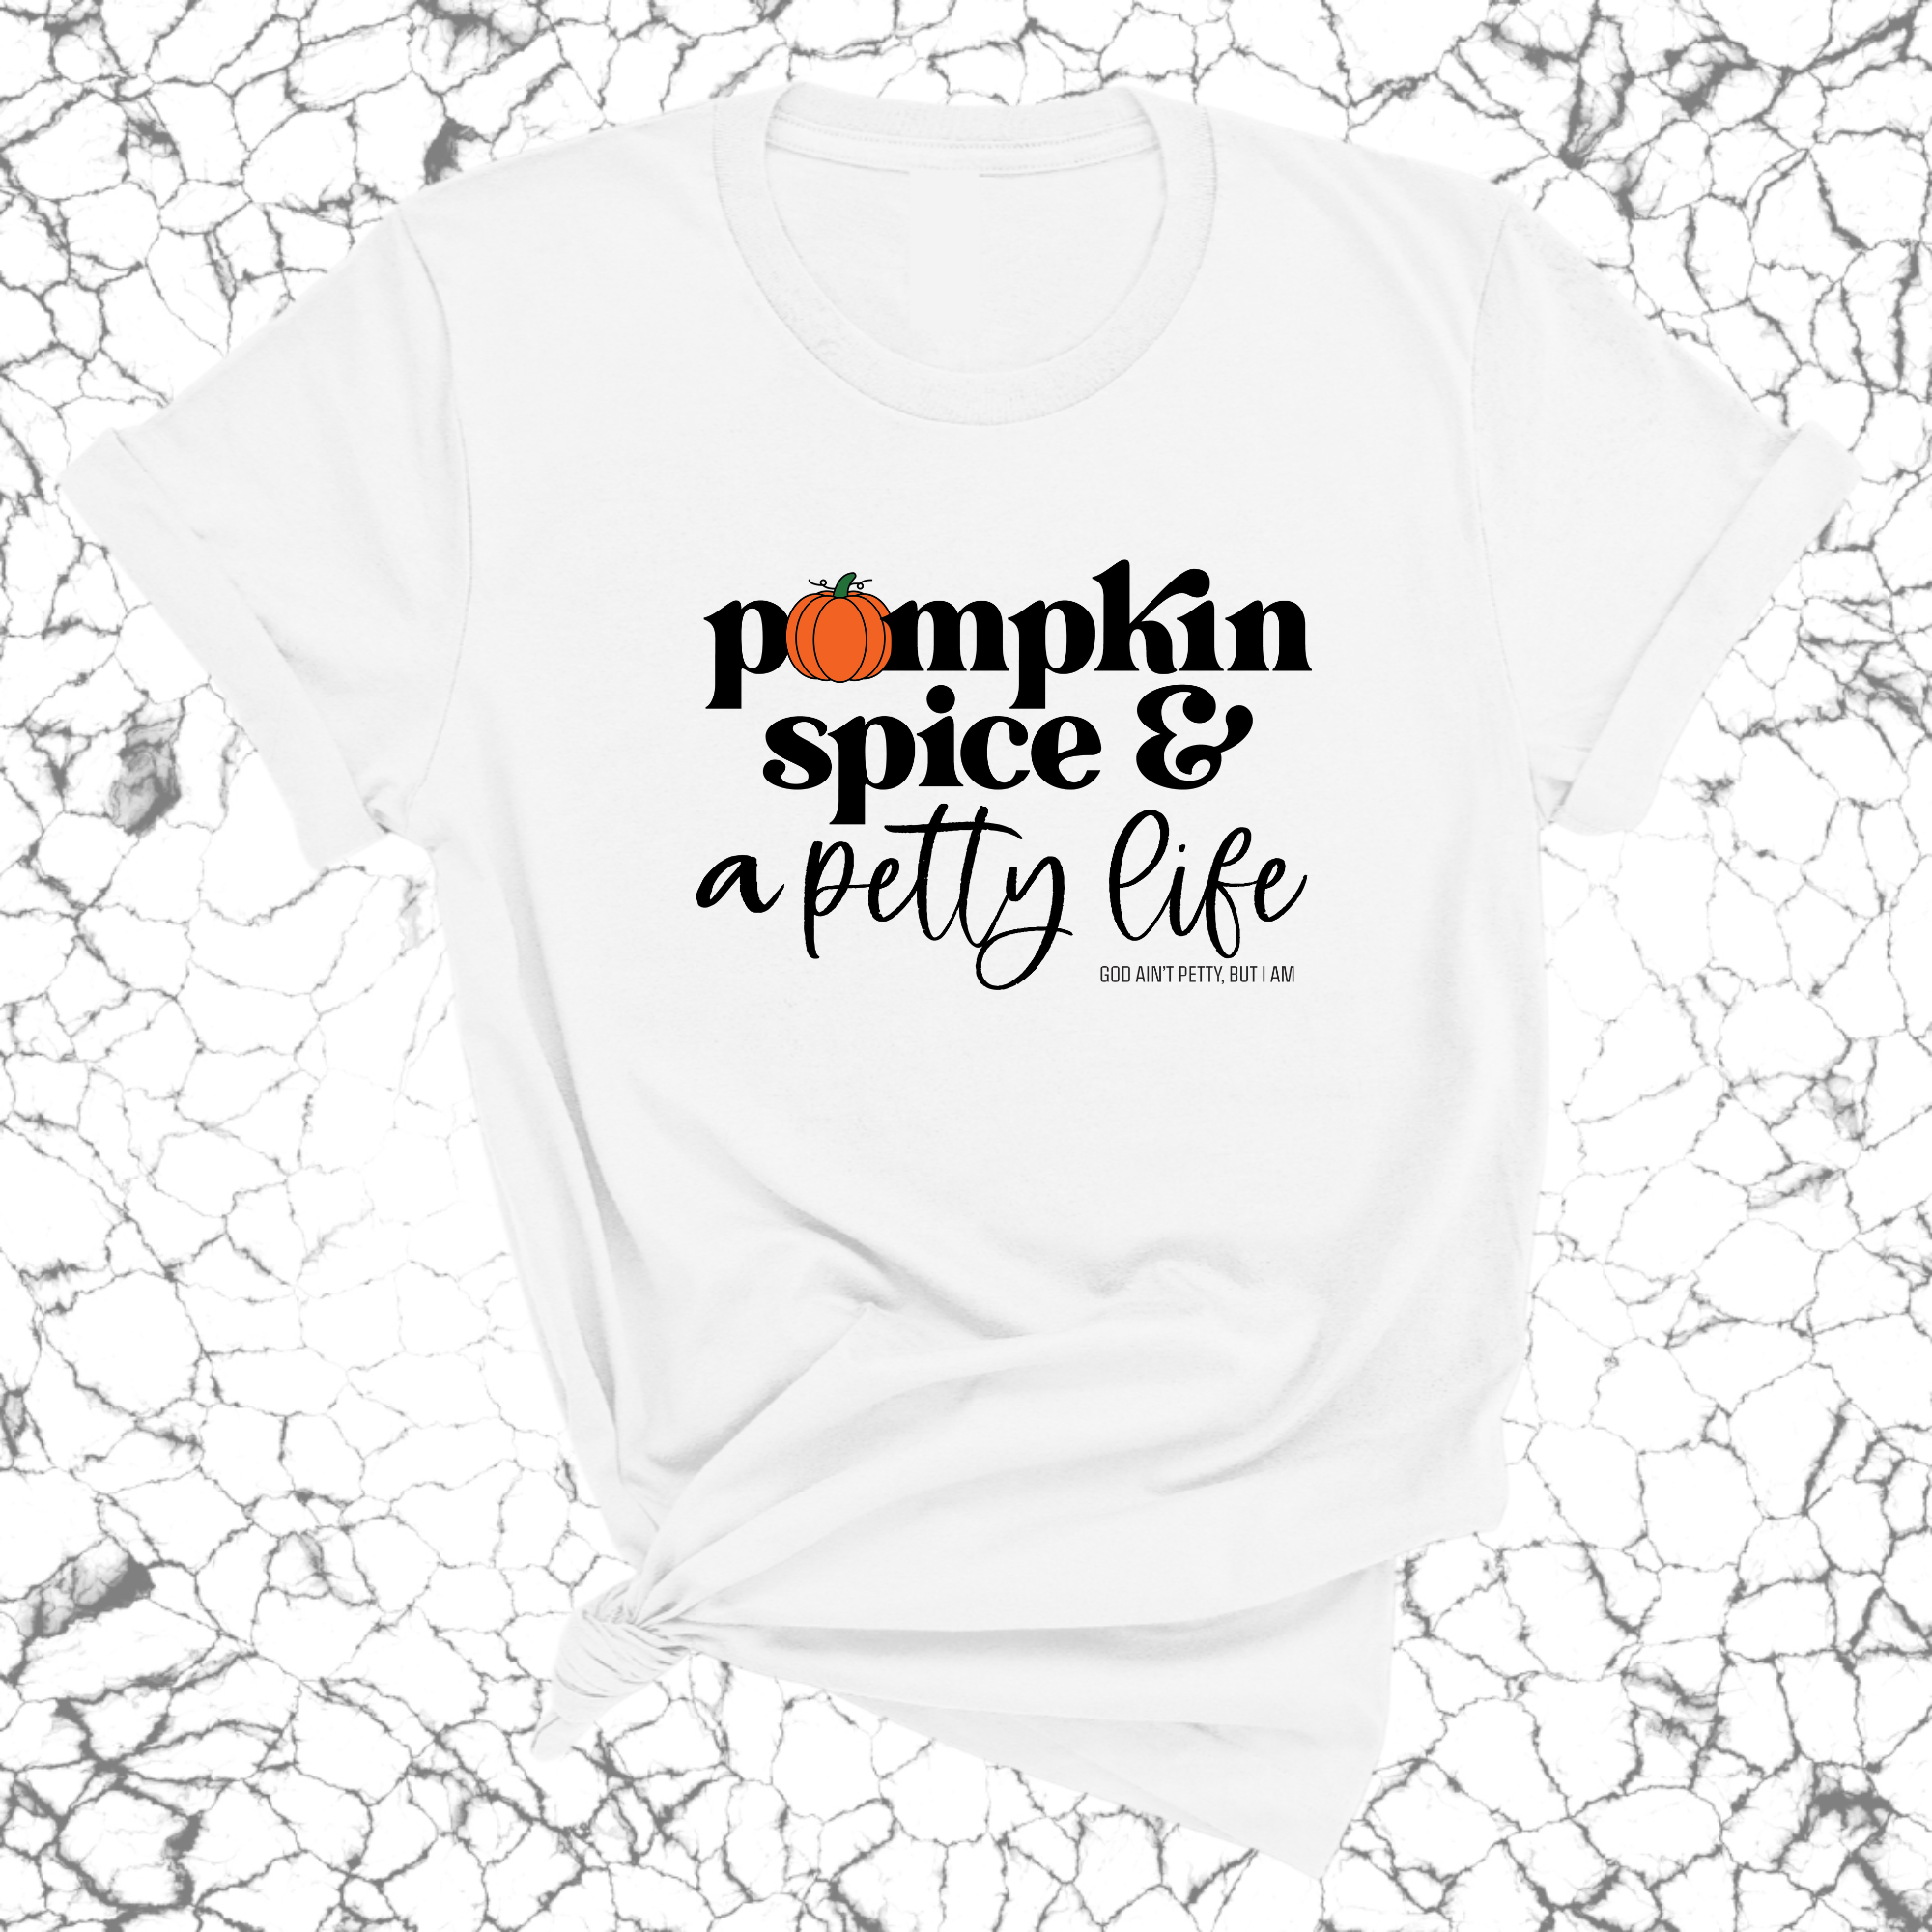 Pumpkin Spice and a Petty life Unisex Tee-T-Shirt-The Original God Ain't Petty But I Am